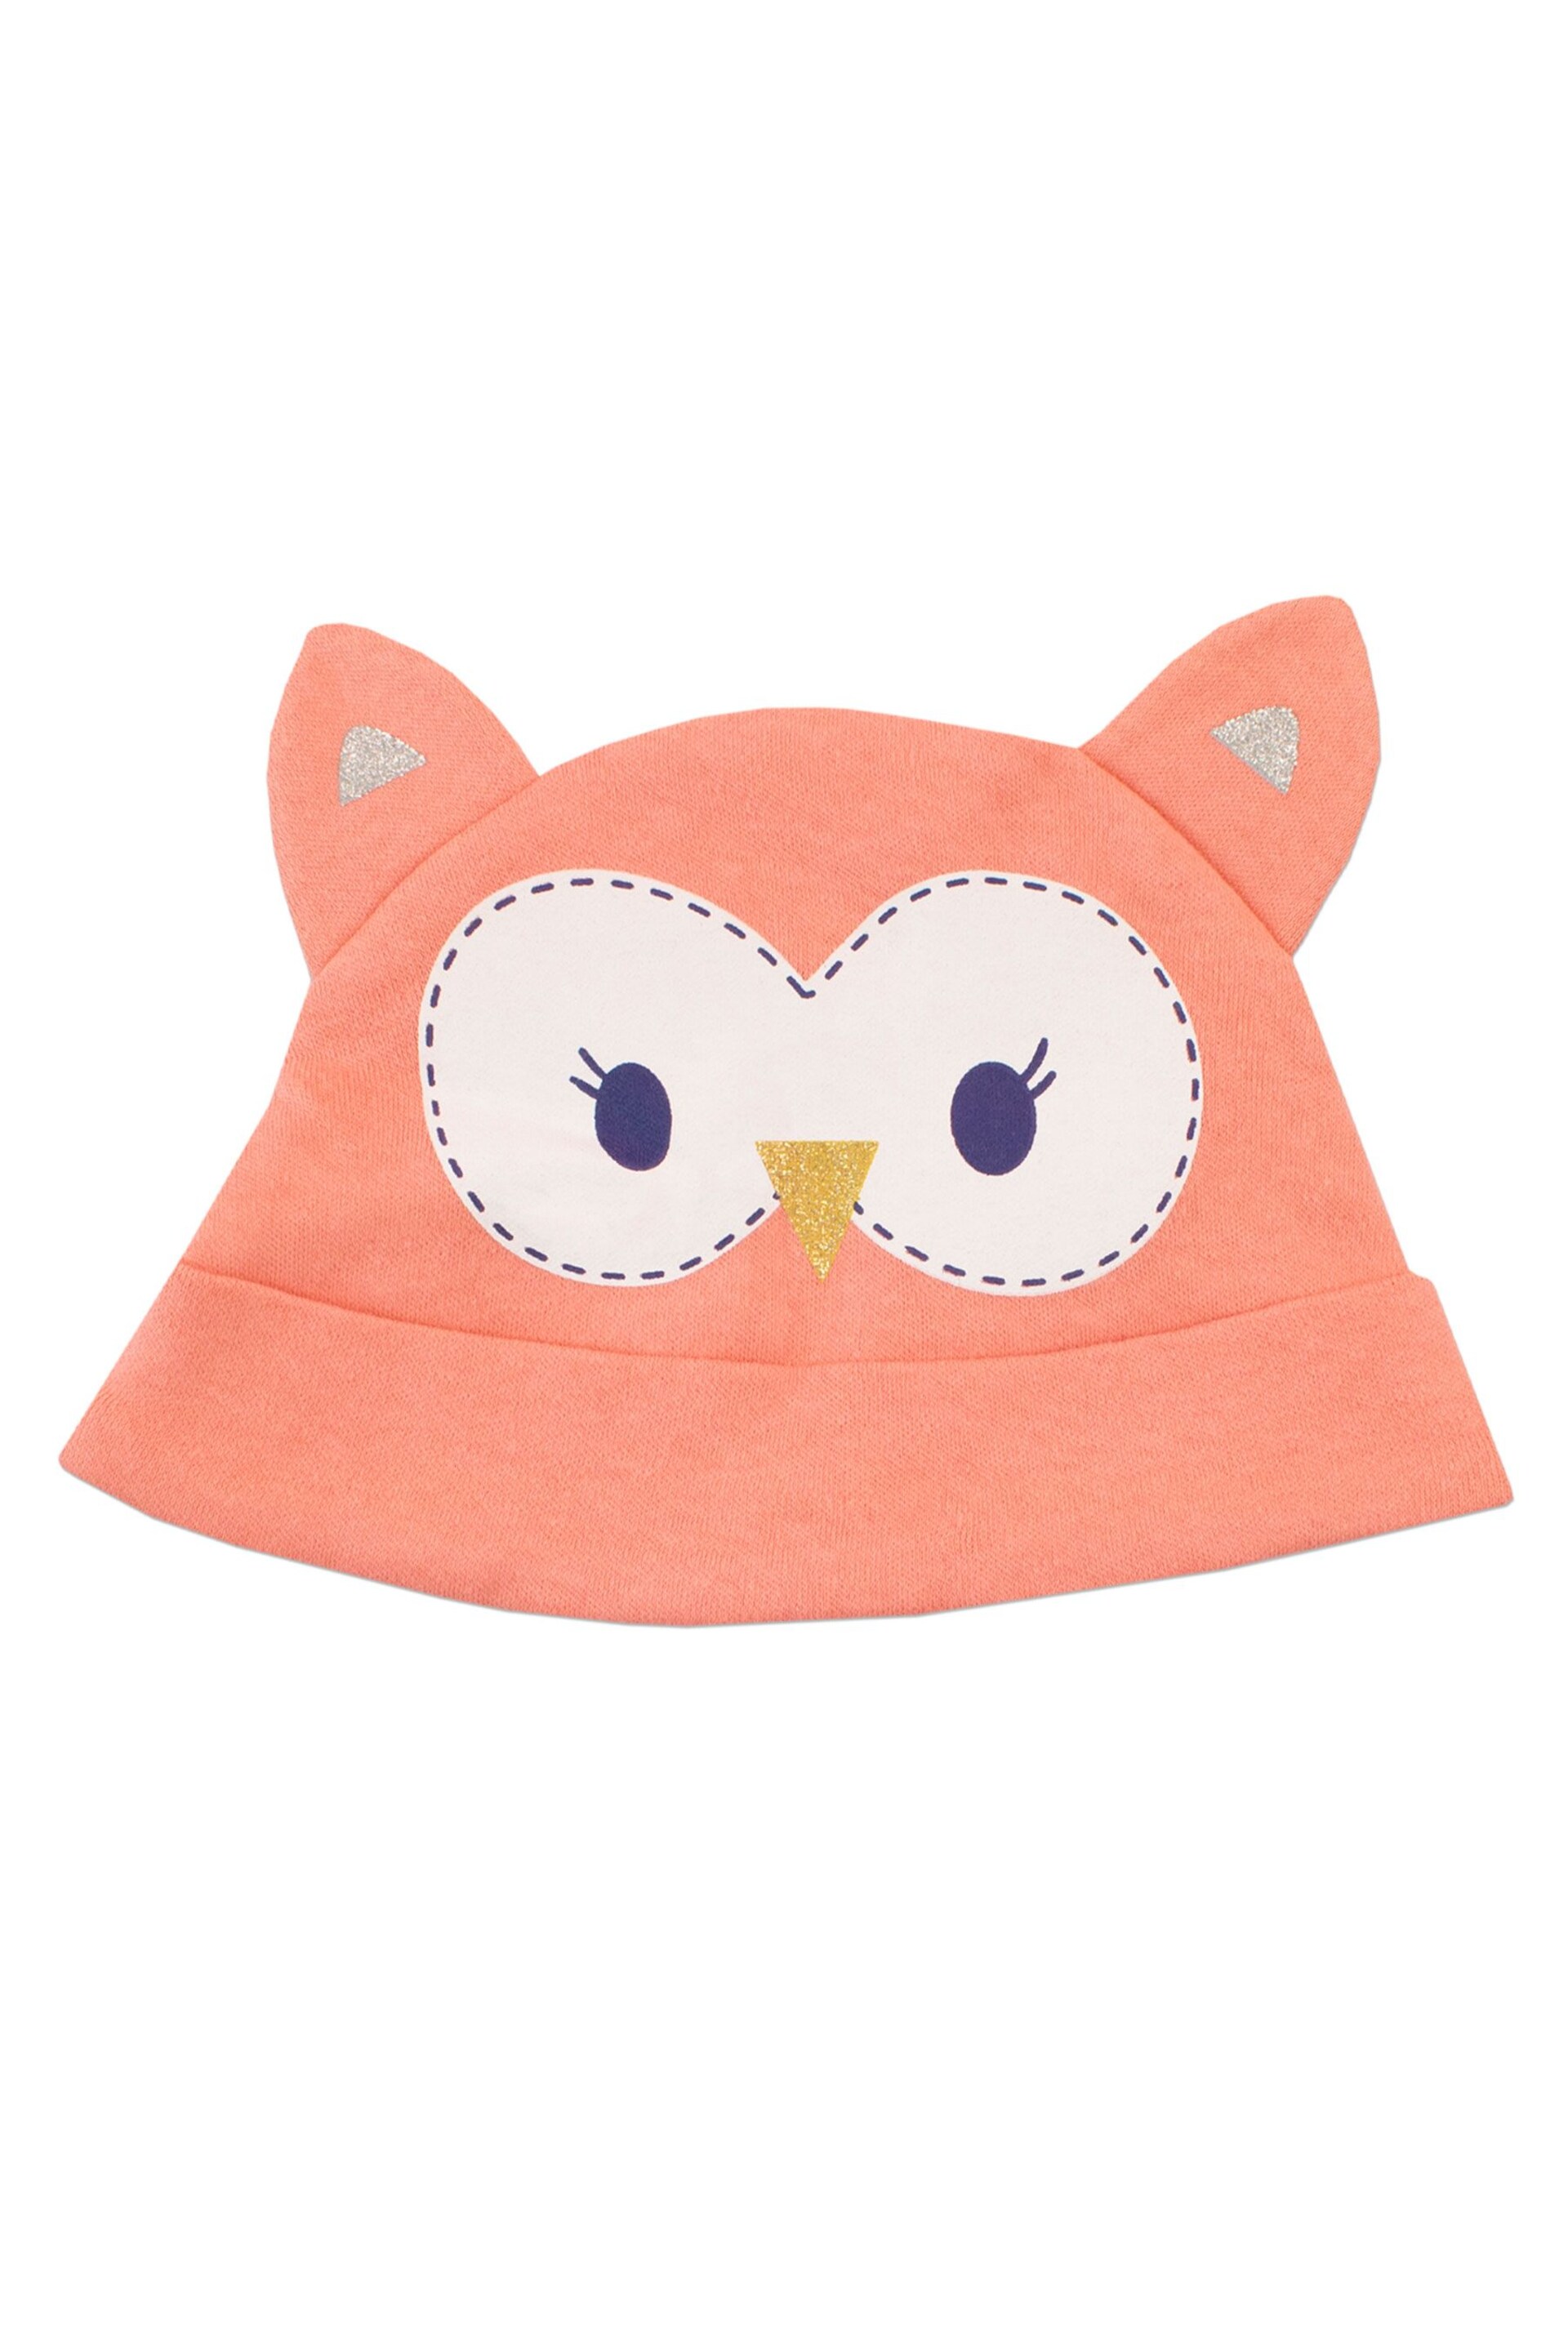 Harry Bear White Owl Love You Forever Sleepsuit & Hat Set - Image 4 of 4